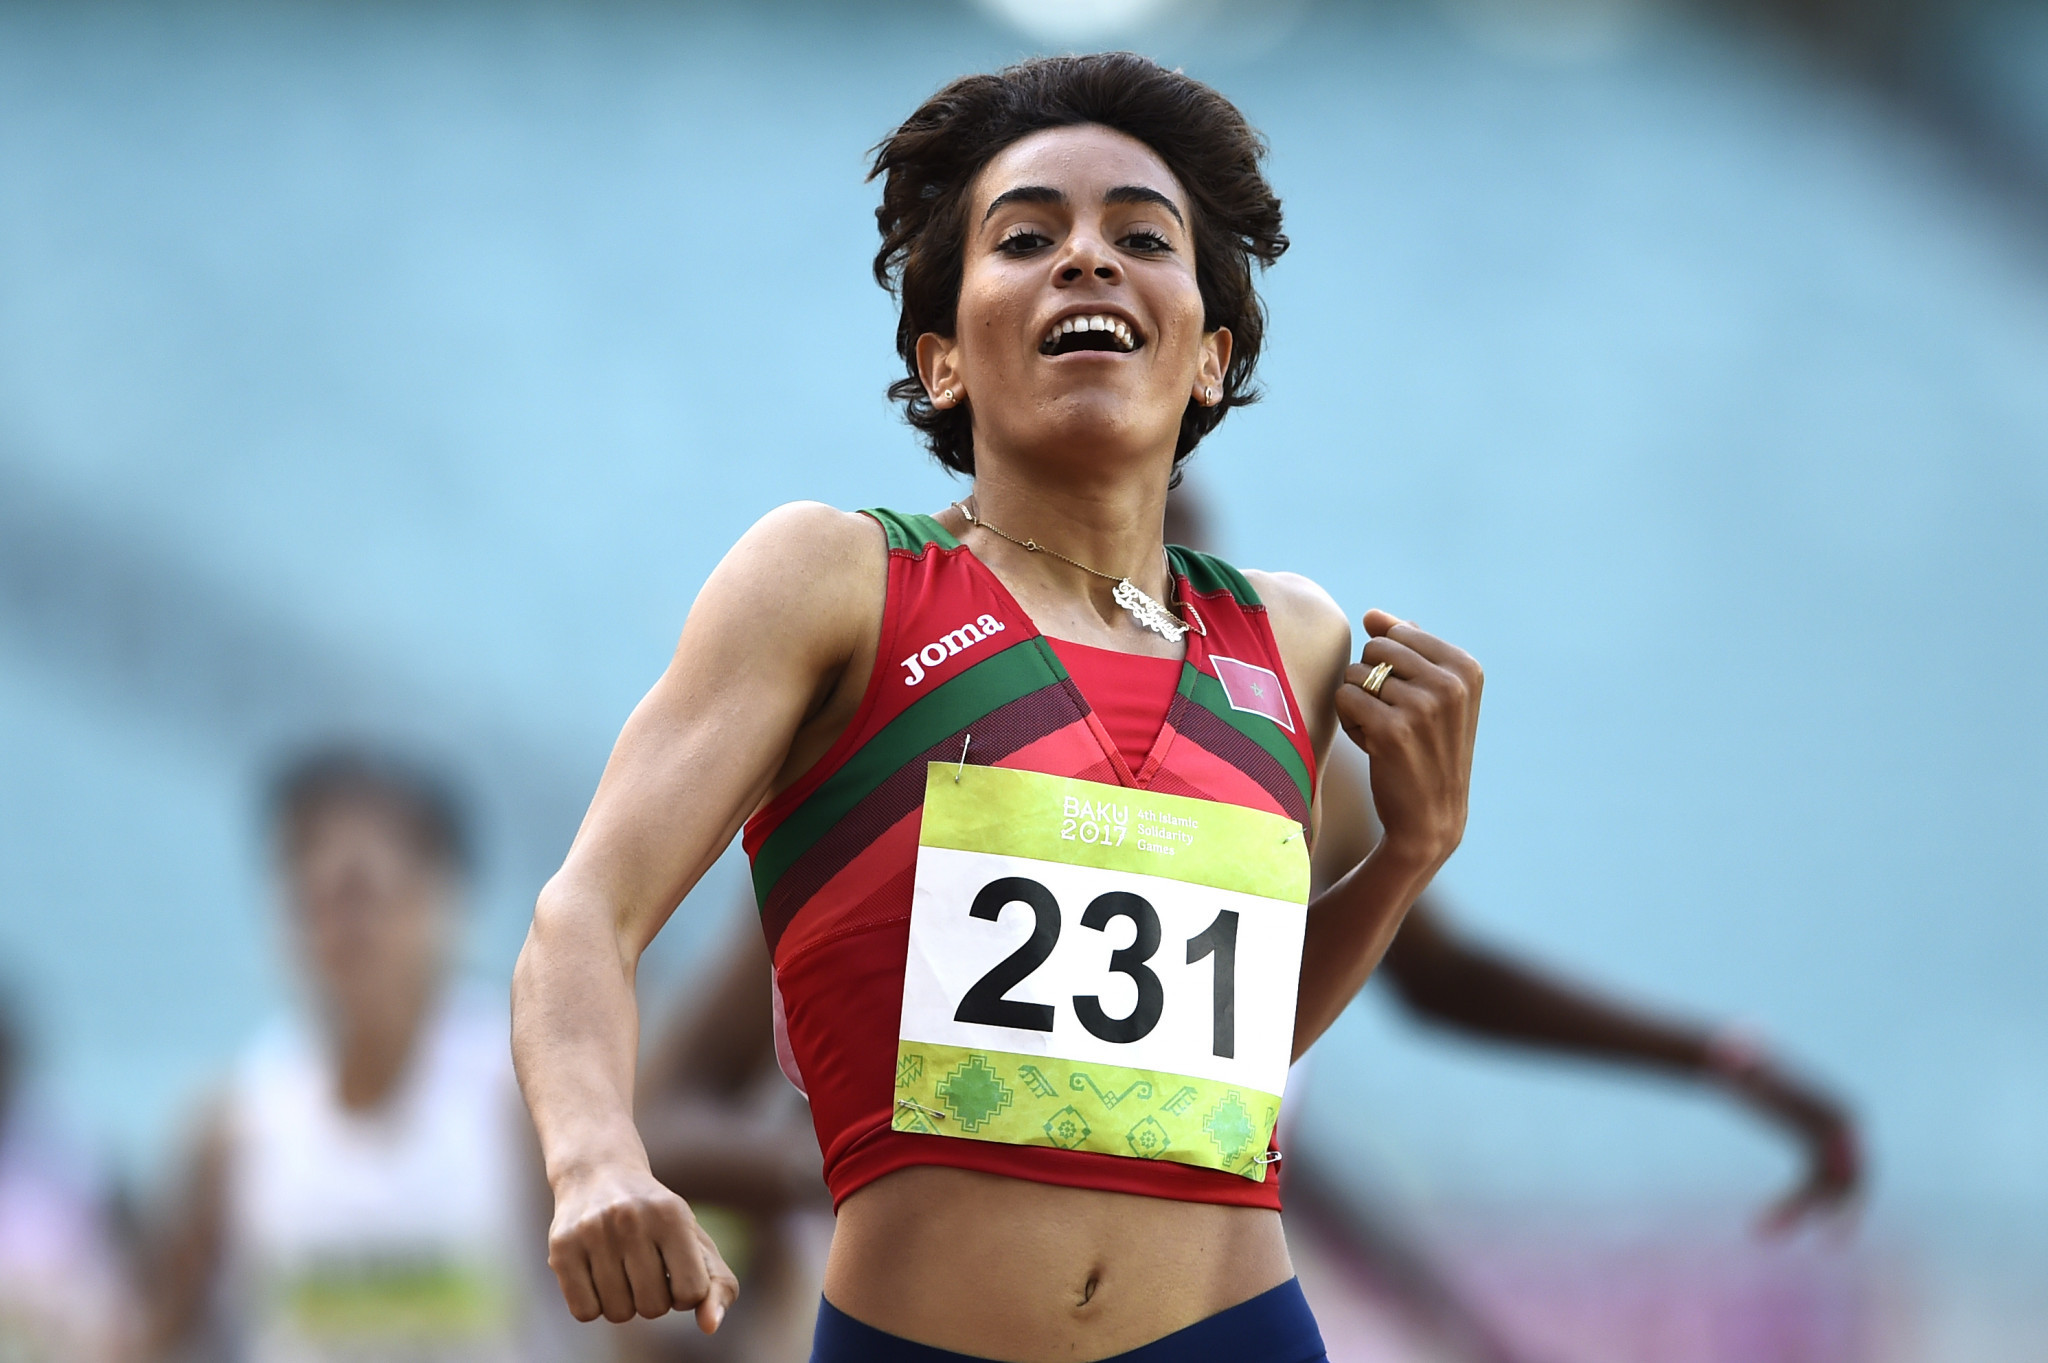 Berabah wins exciting long jump gold at Mediterranean Games